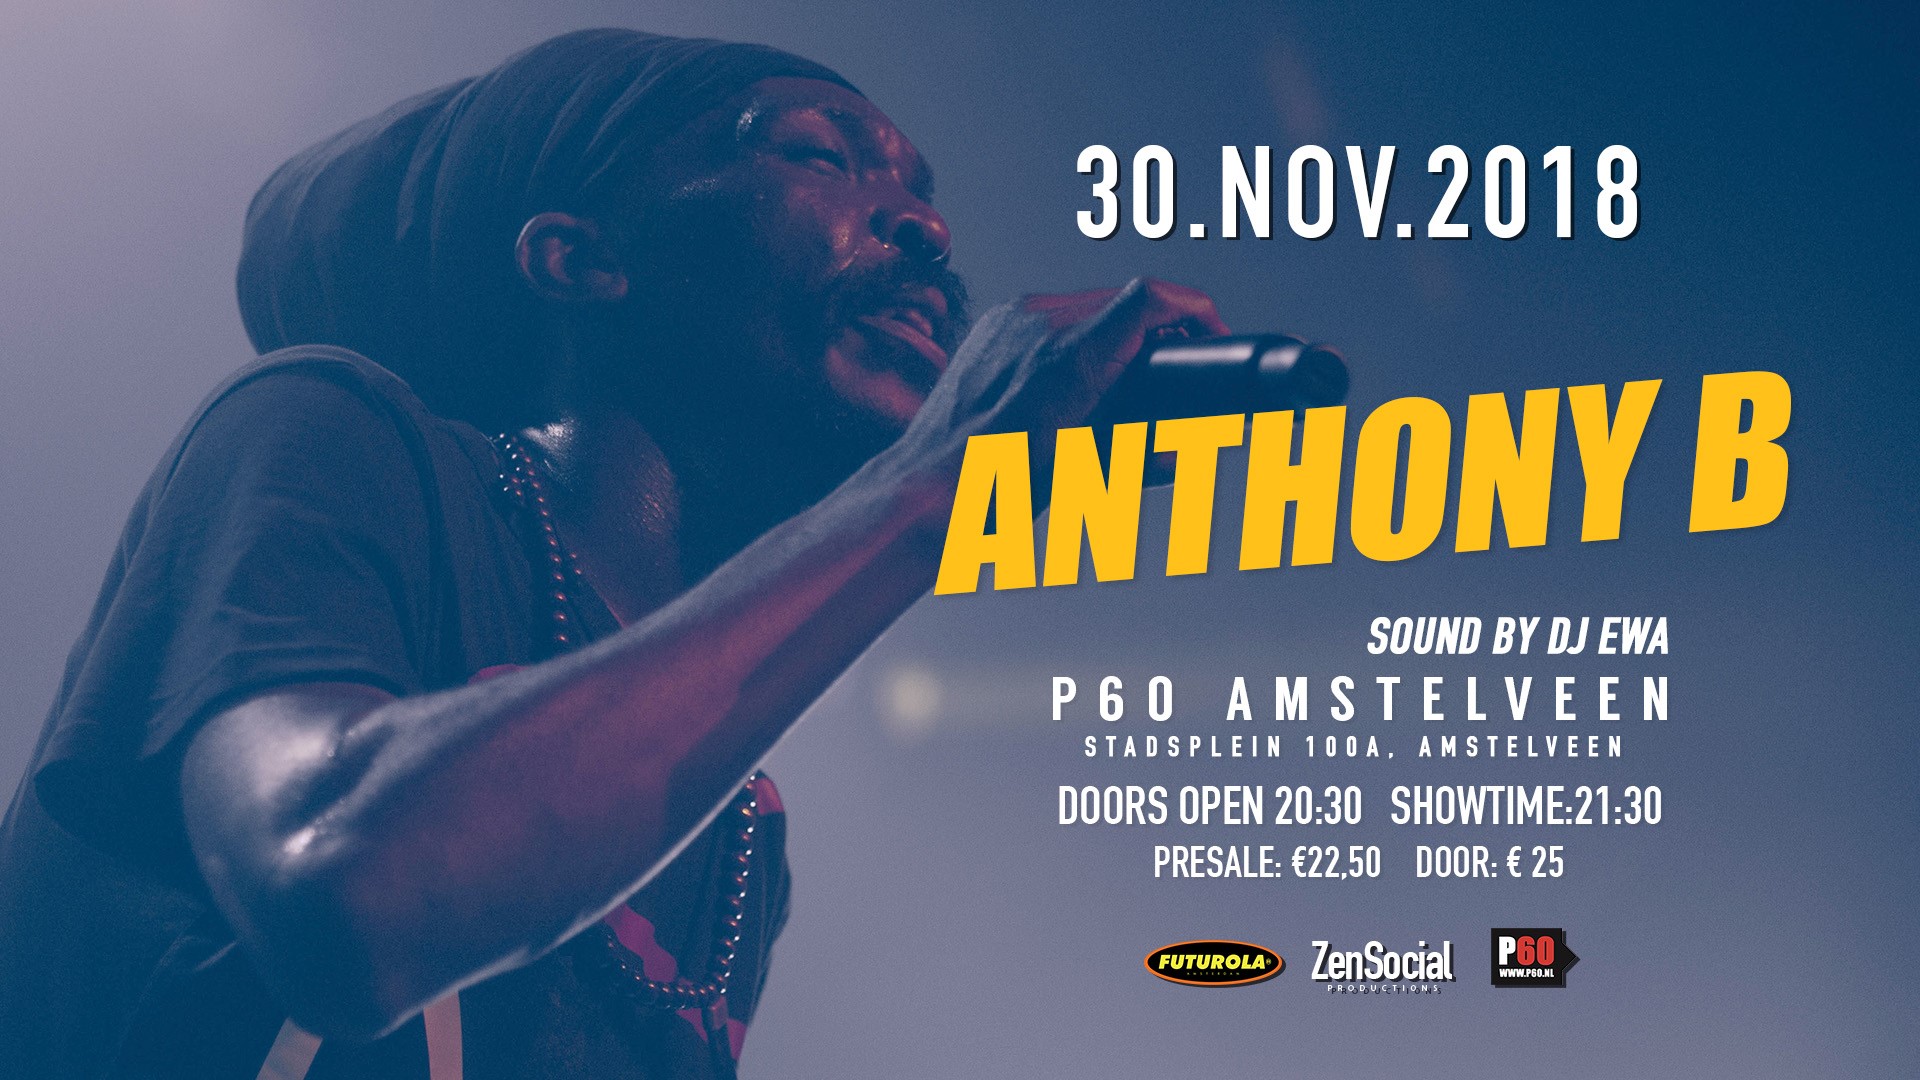 Anthony B in P60 Amstelveen